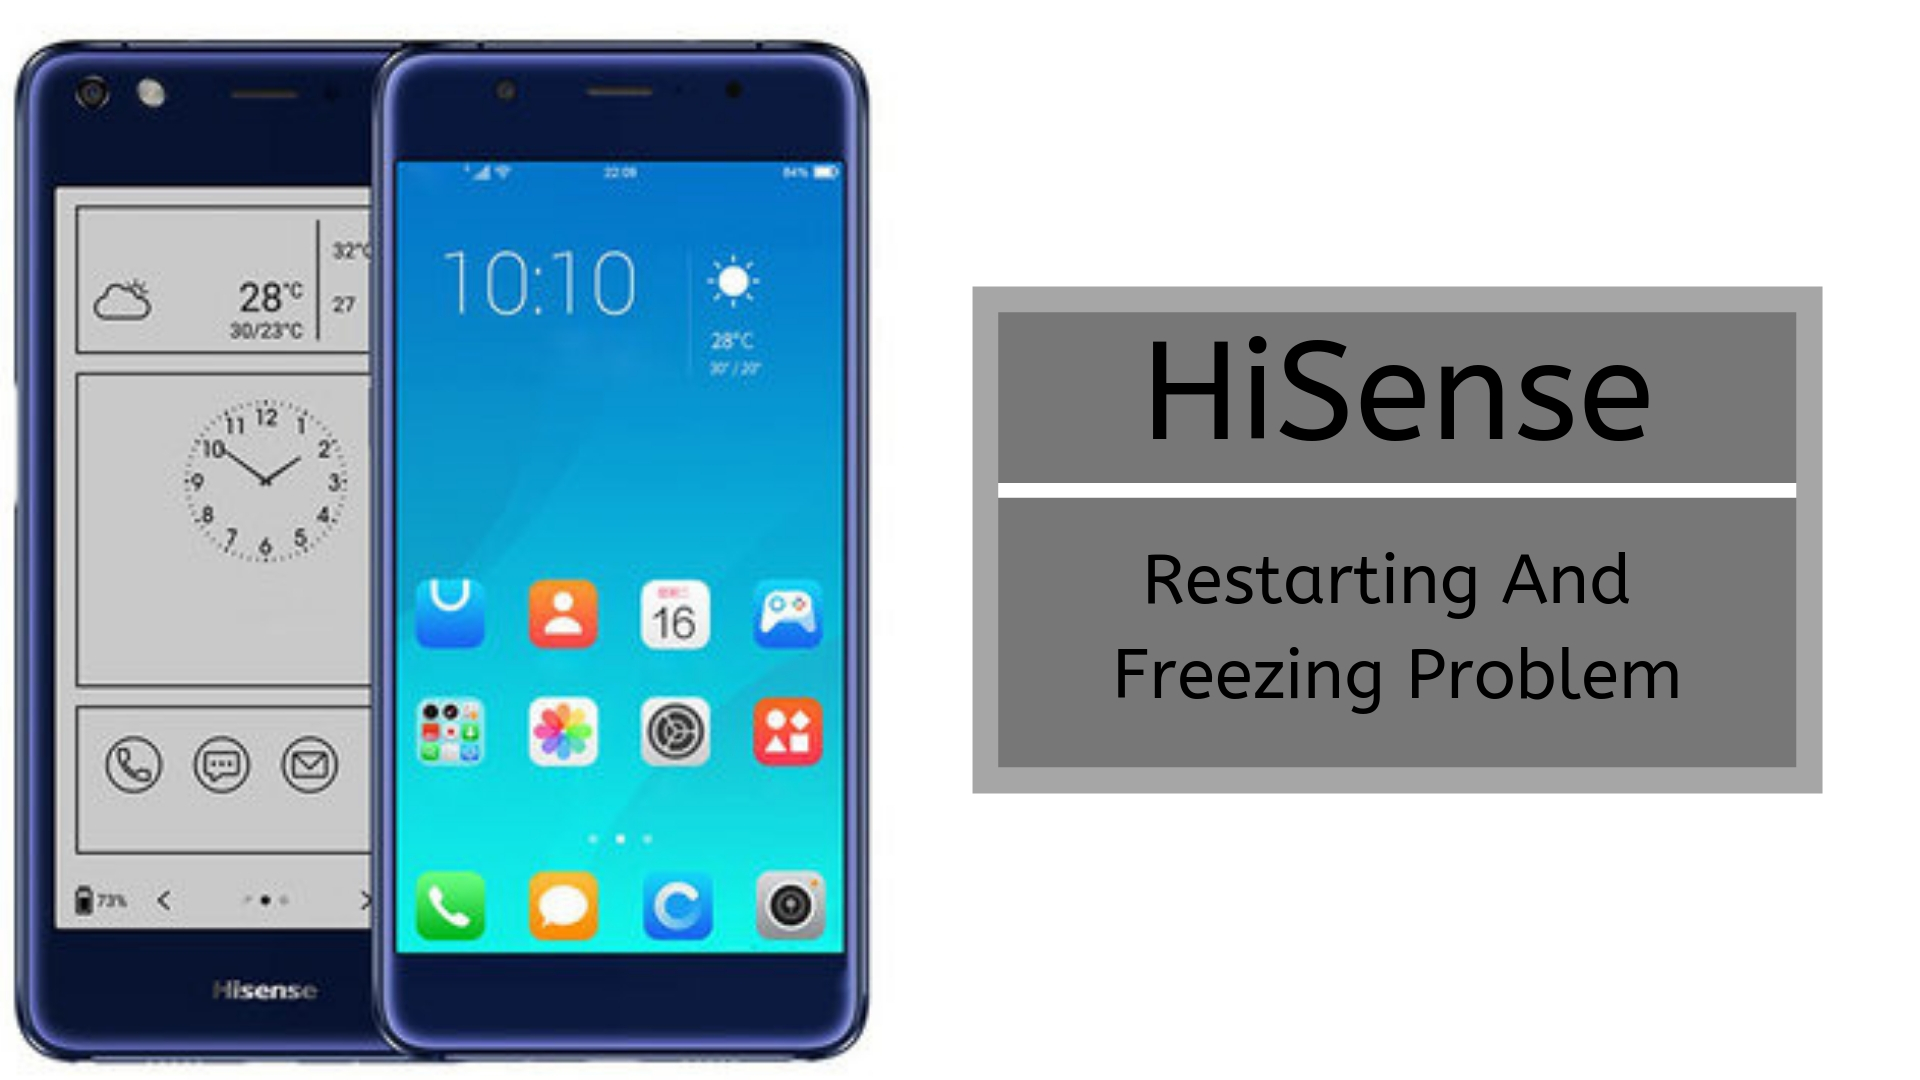 Methods To Fix Hisense Restarting And Freezing Problem